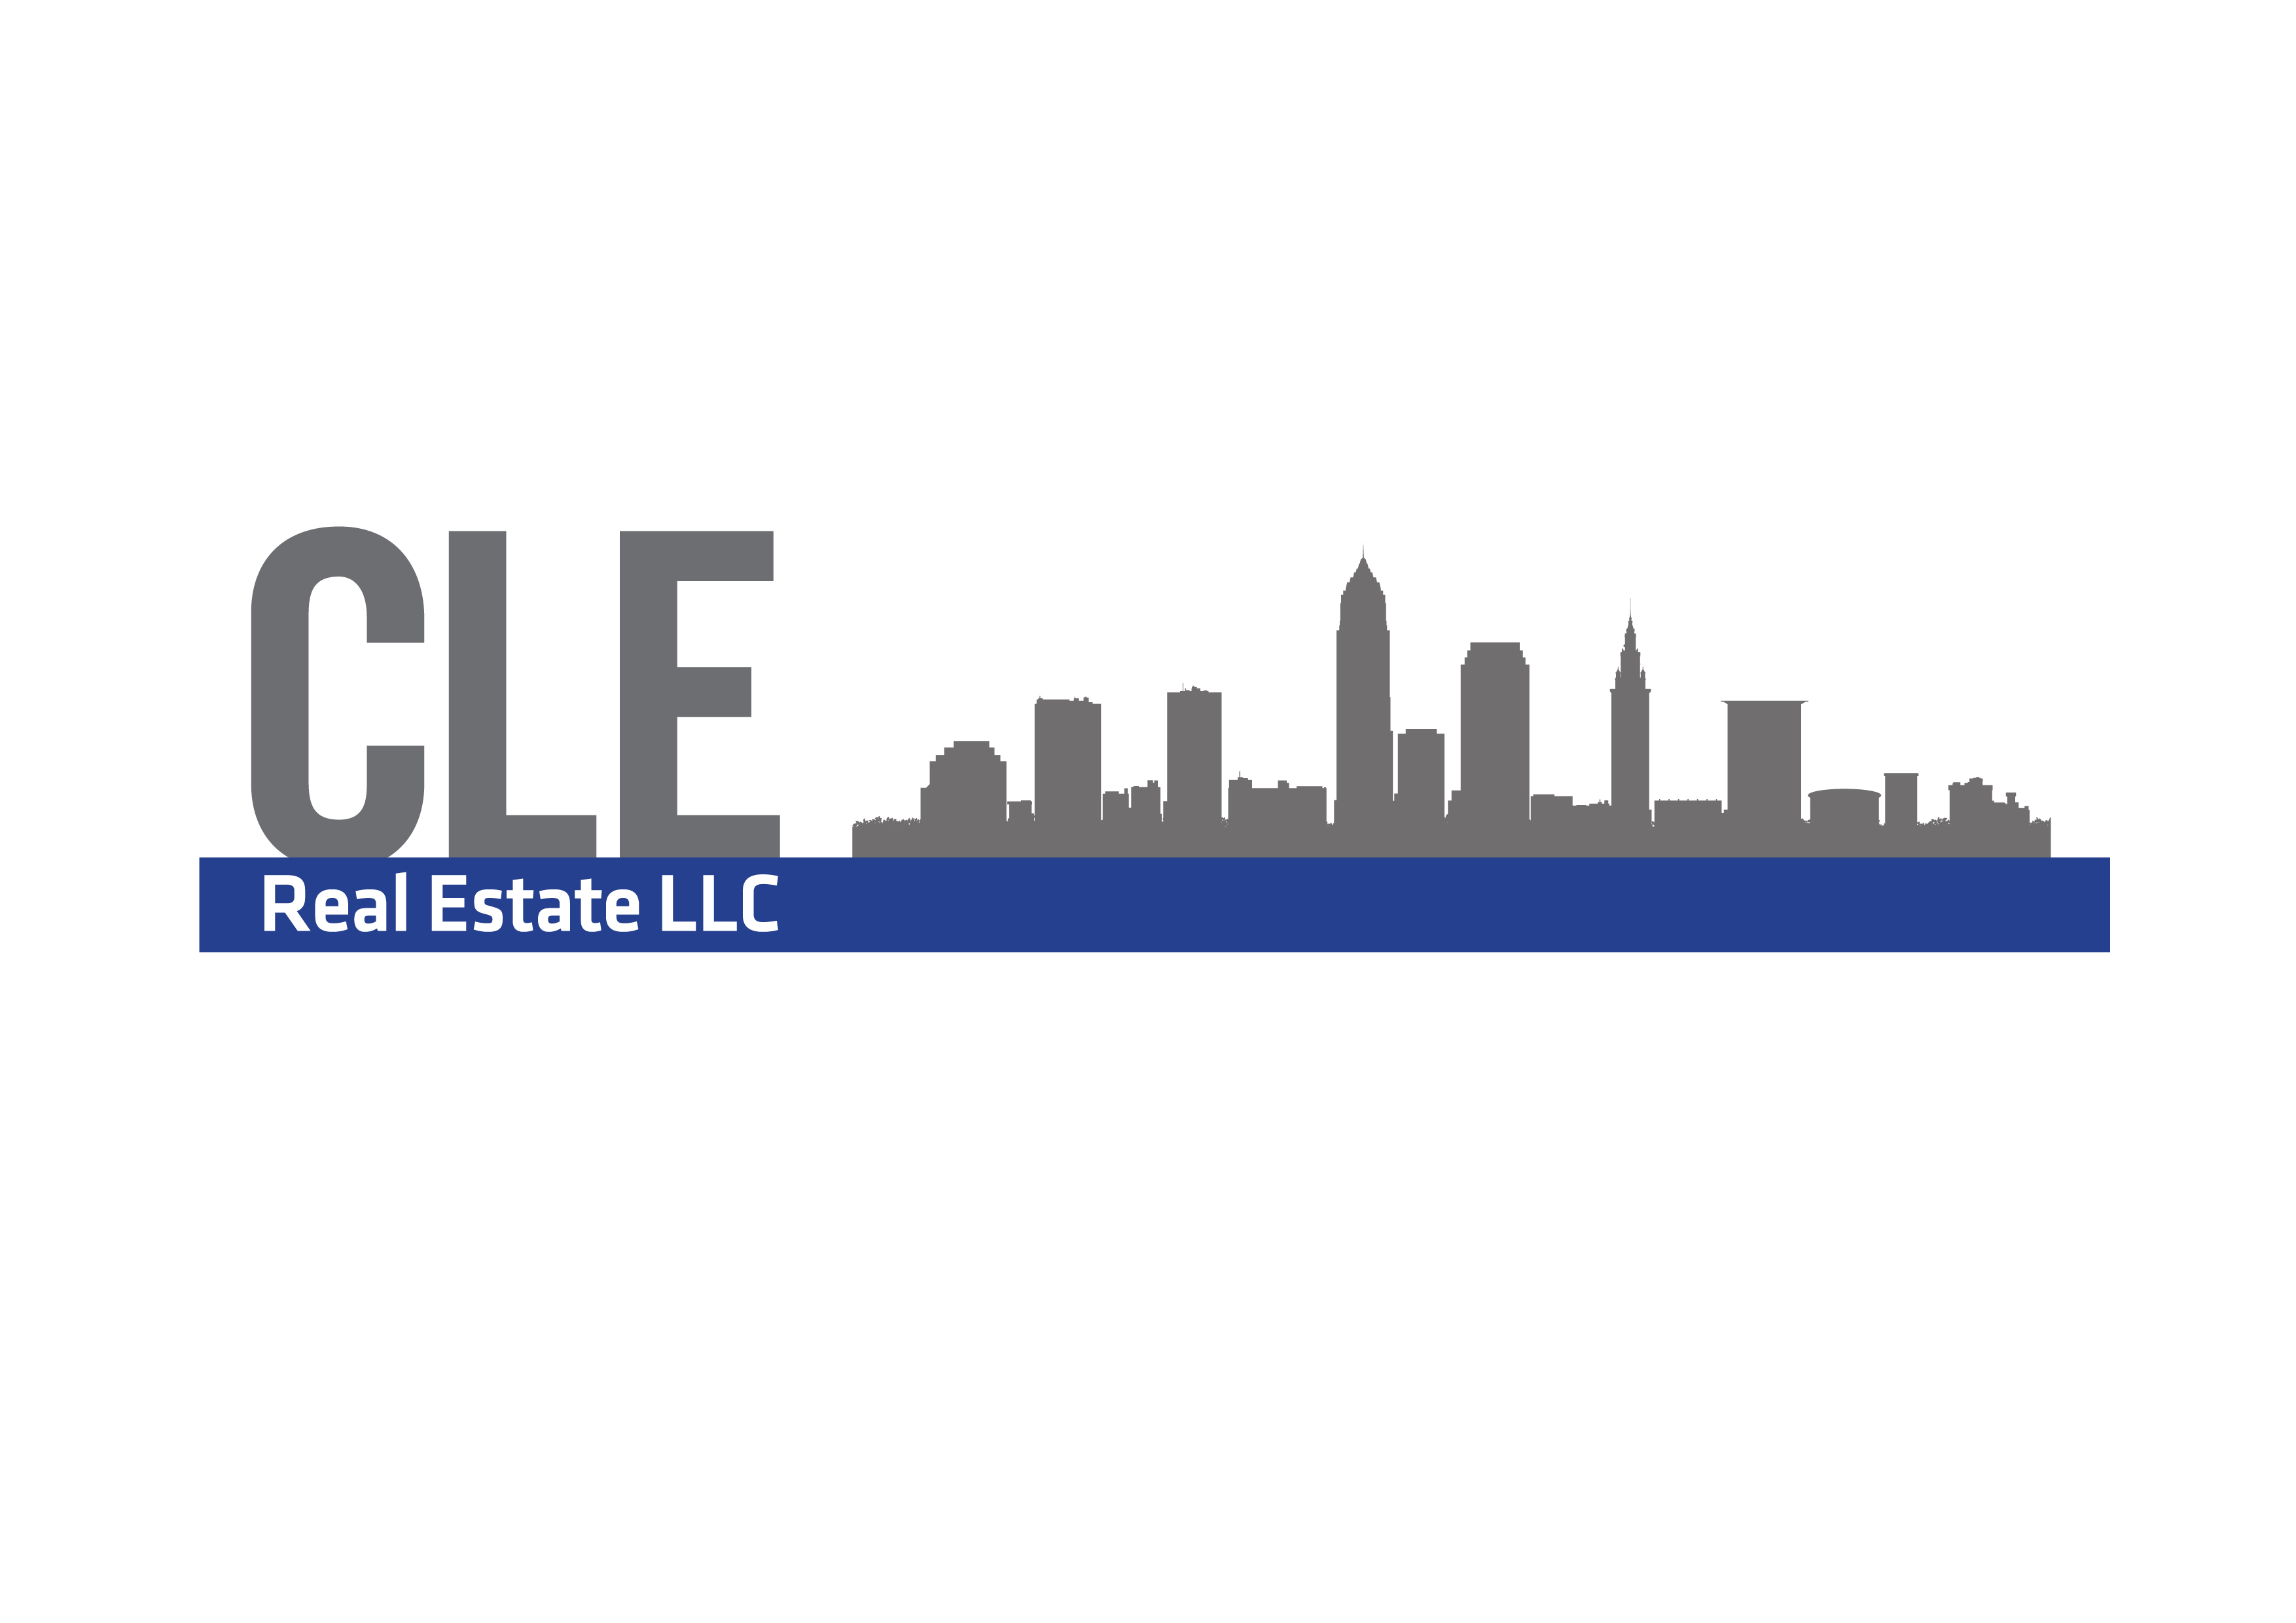 CLE Real Estate LLC